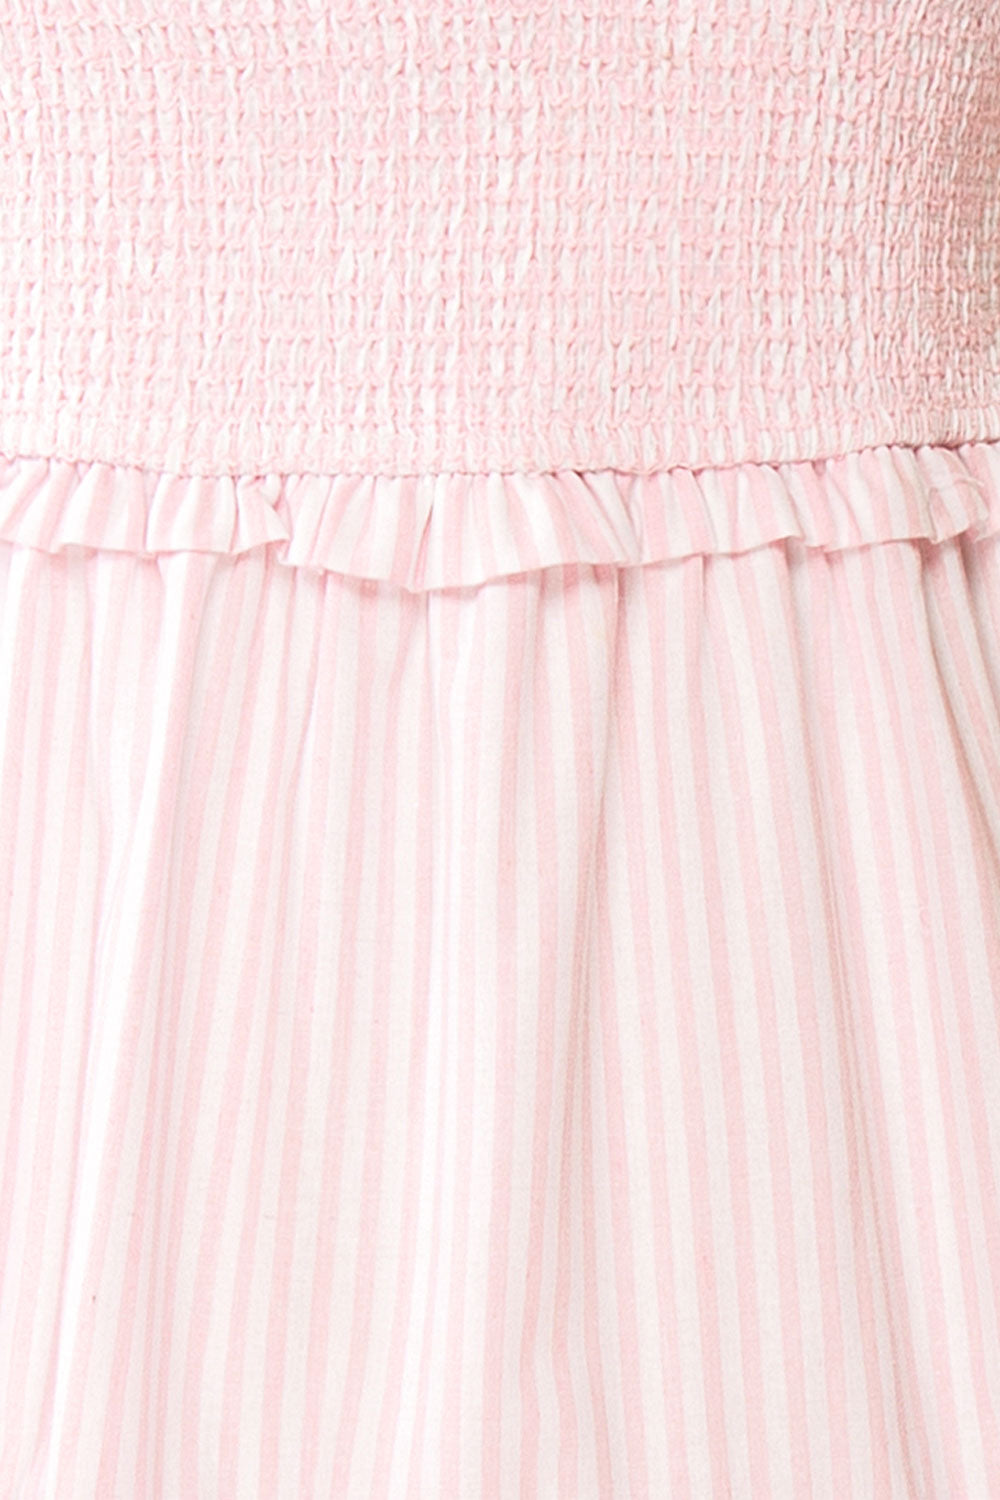 Addison Long Pink Striped Dress | Boutique 1861 fabric 